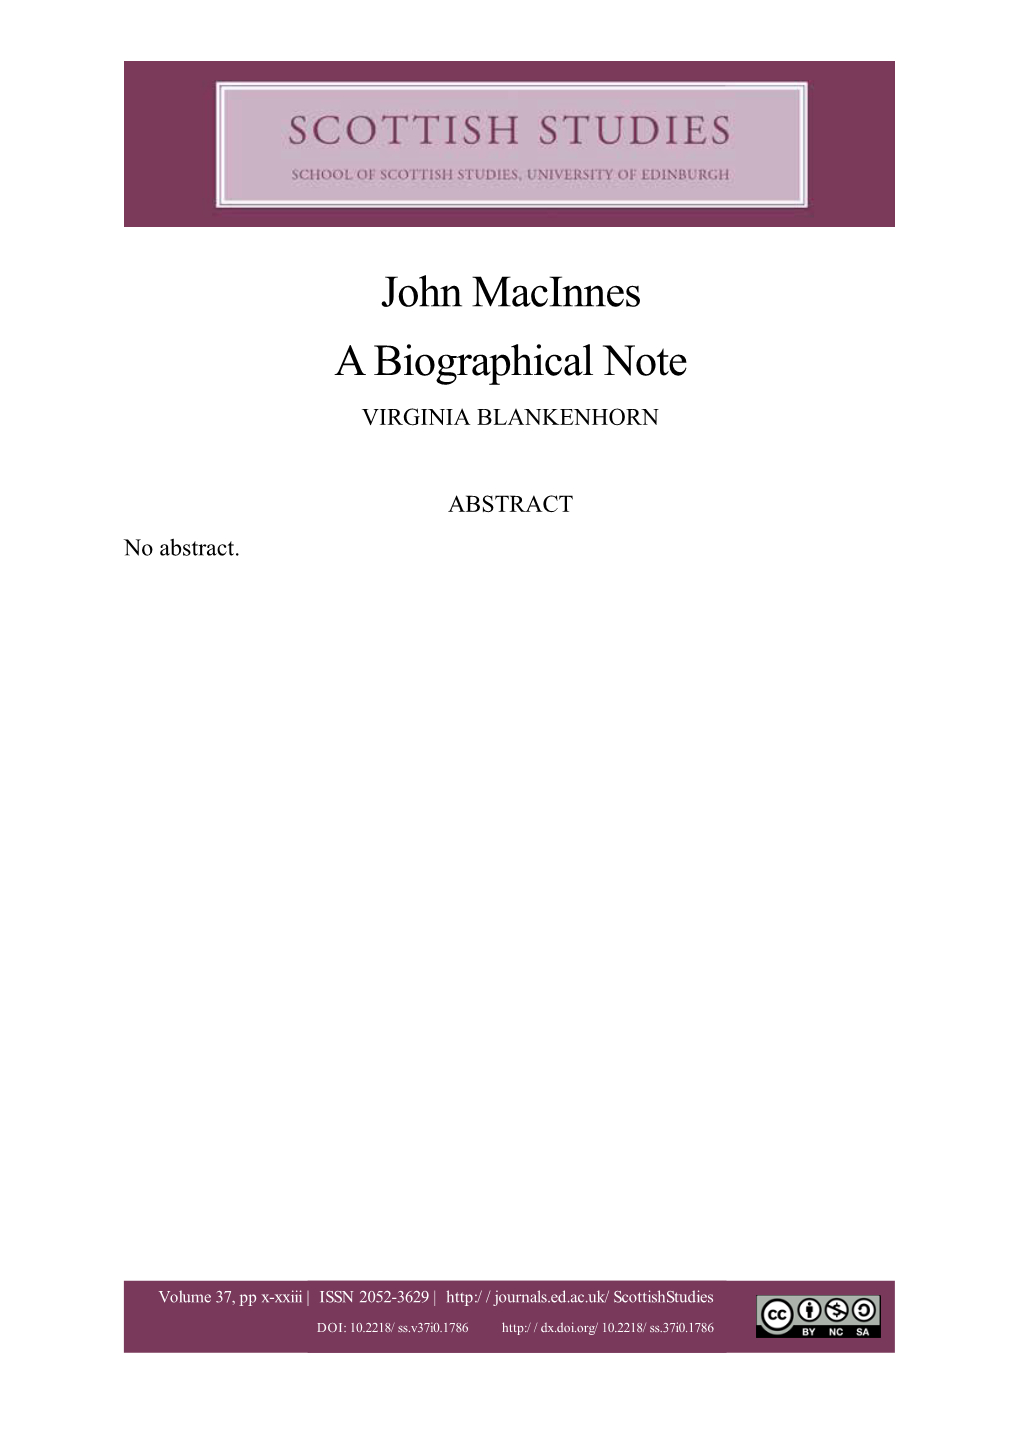 John Macinnes a Biographical Note VIRGINIA BLANKENHORN